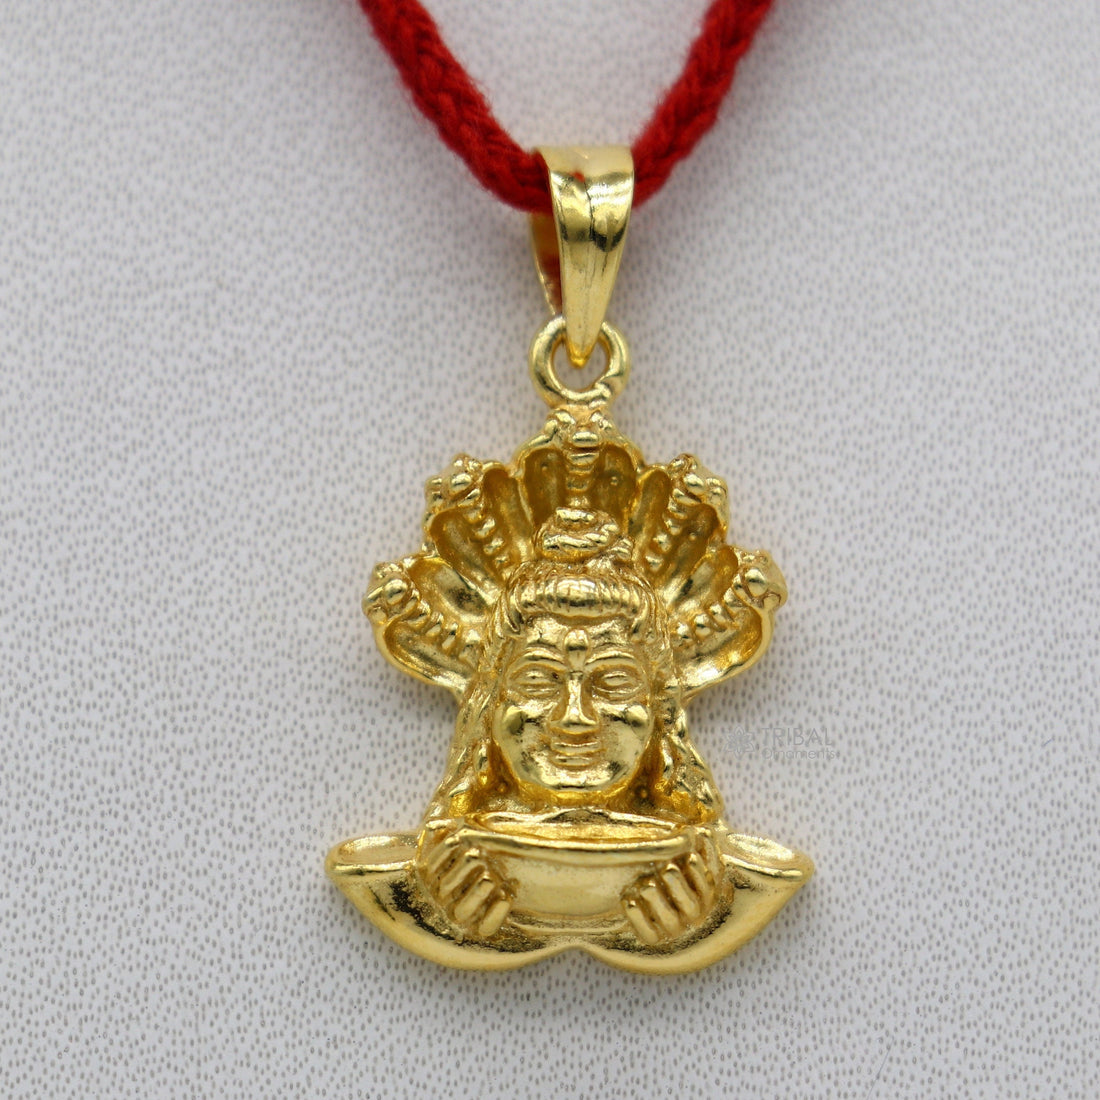 925 sterling silver handmade idol God Shiva pendant, amazing designer gold polished silver mahakal pendant unisex gifting jewelry nsp597 - TRIBAL ORNAMENTS